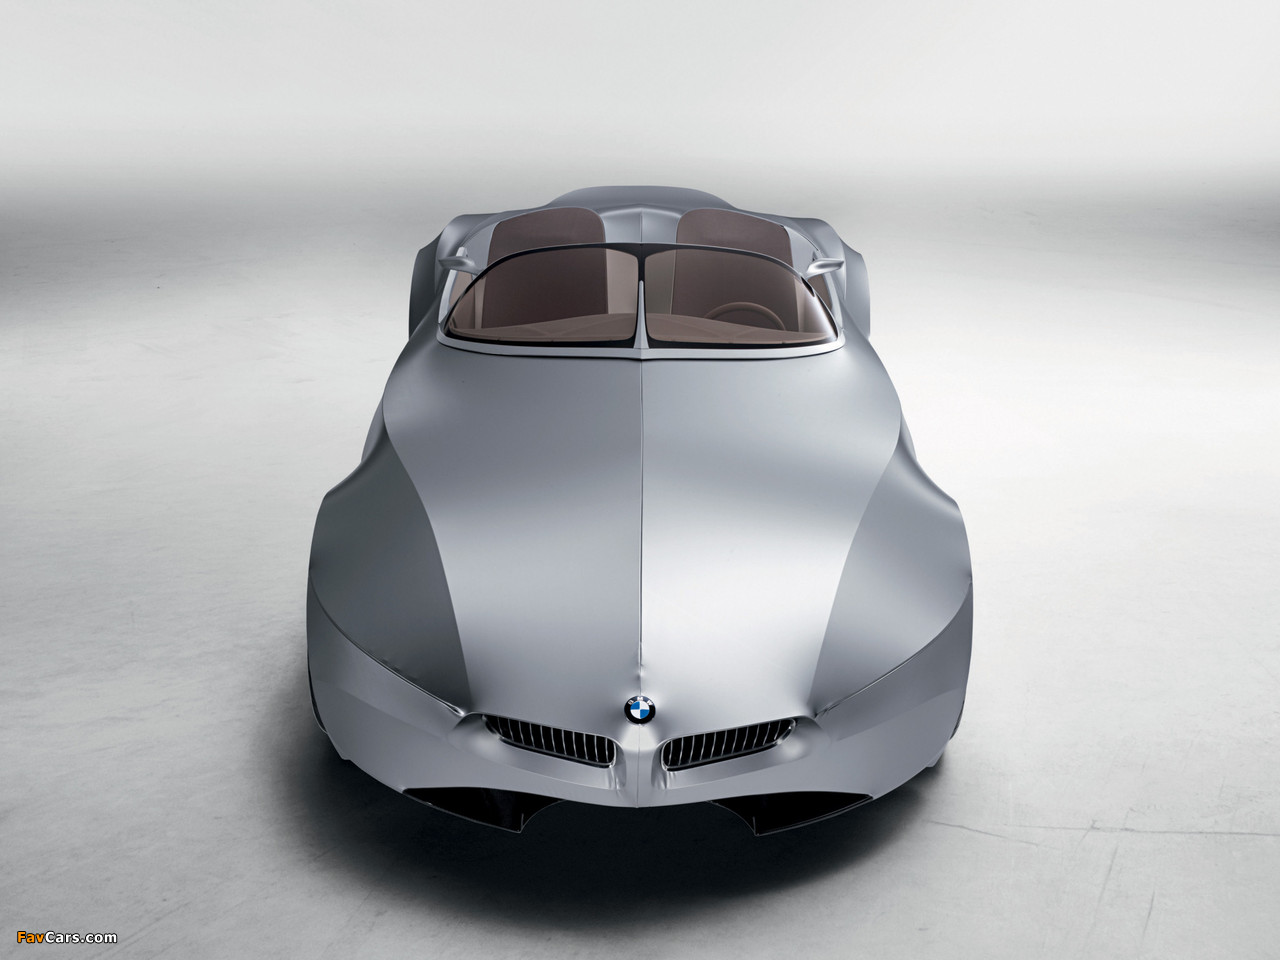 BMW GINA Light Visionsmodell Concept 2008 photos (1280 x 960)